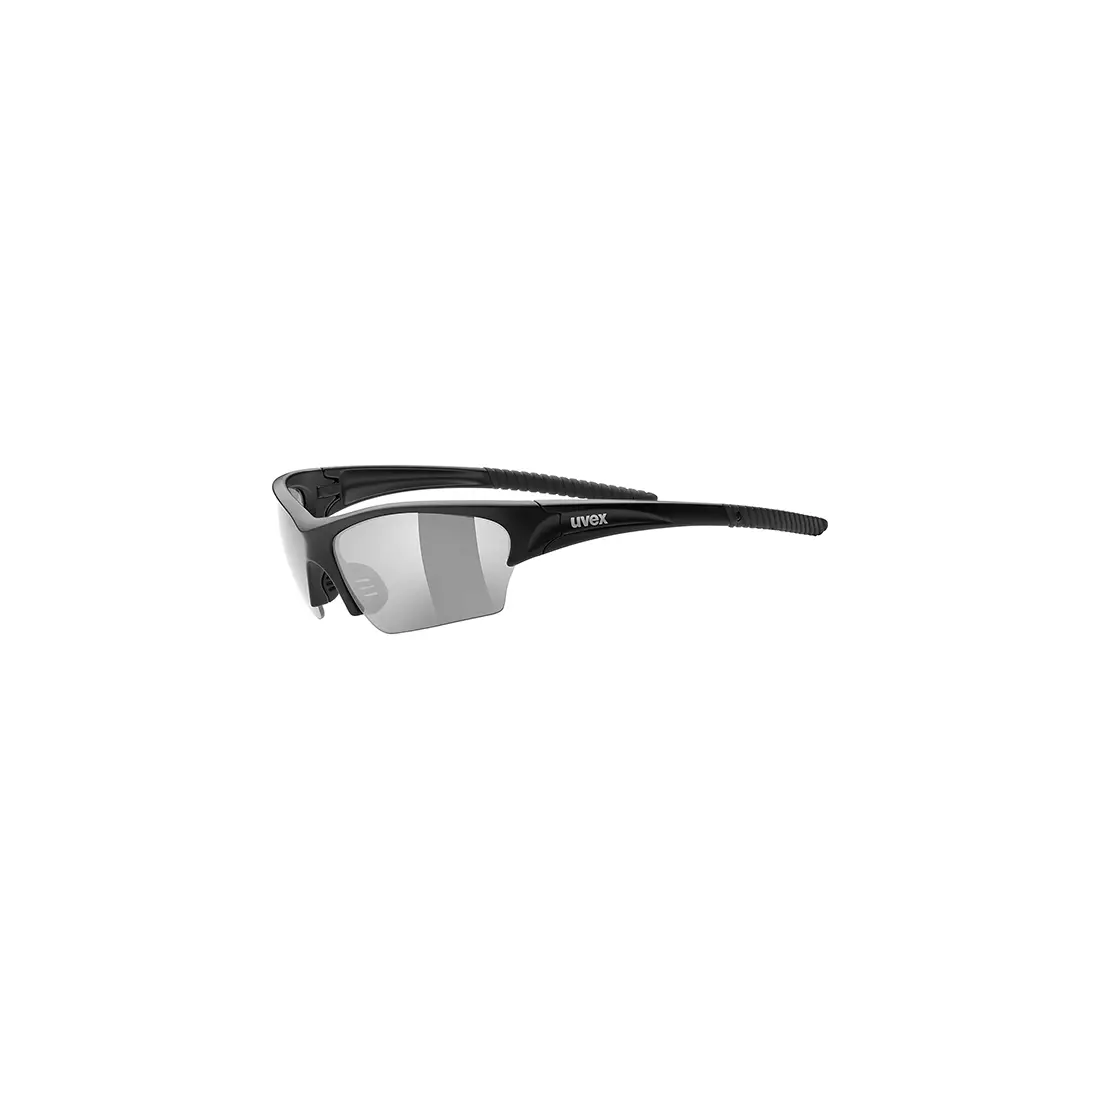 Ochelari pentru biciclete / sport Uvex Sunsation 53/0/606/2210/UNI SS19